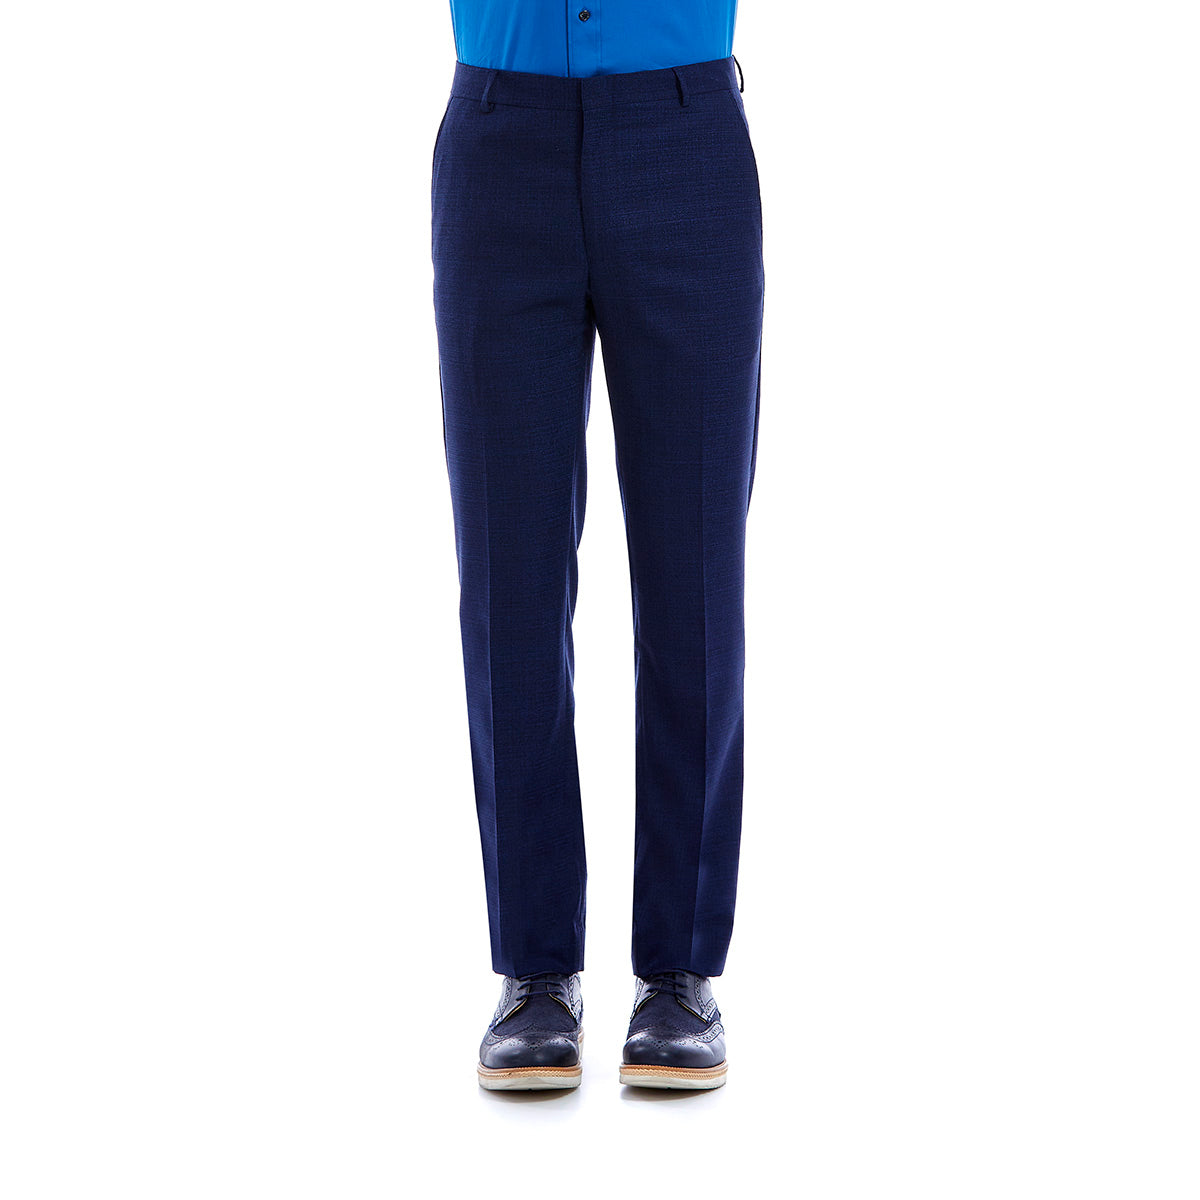 Pantalon formal para hombre | Azul Marino | Slim fit